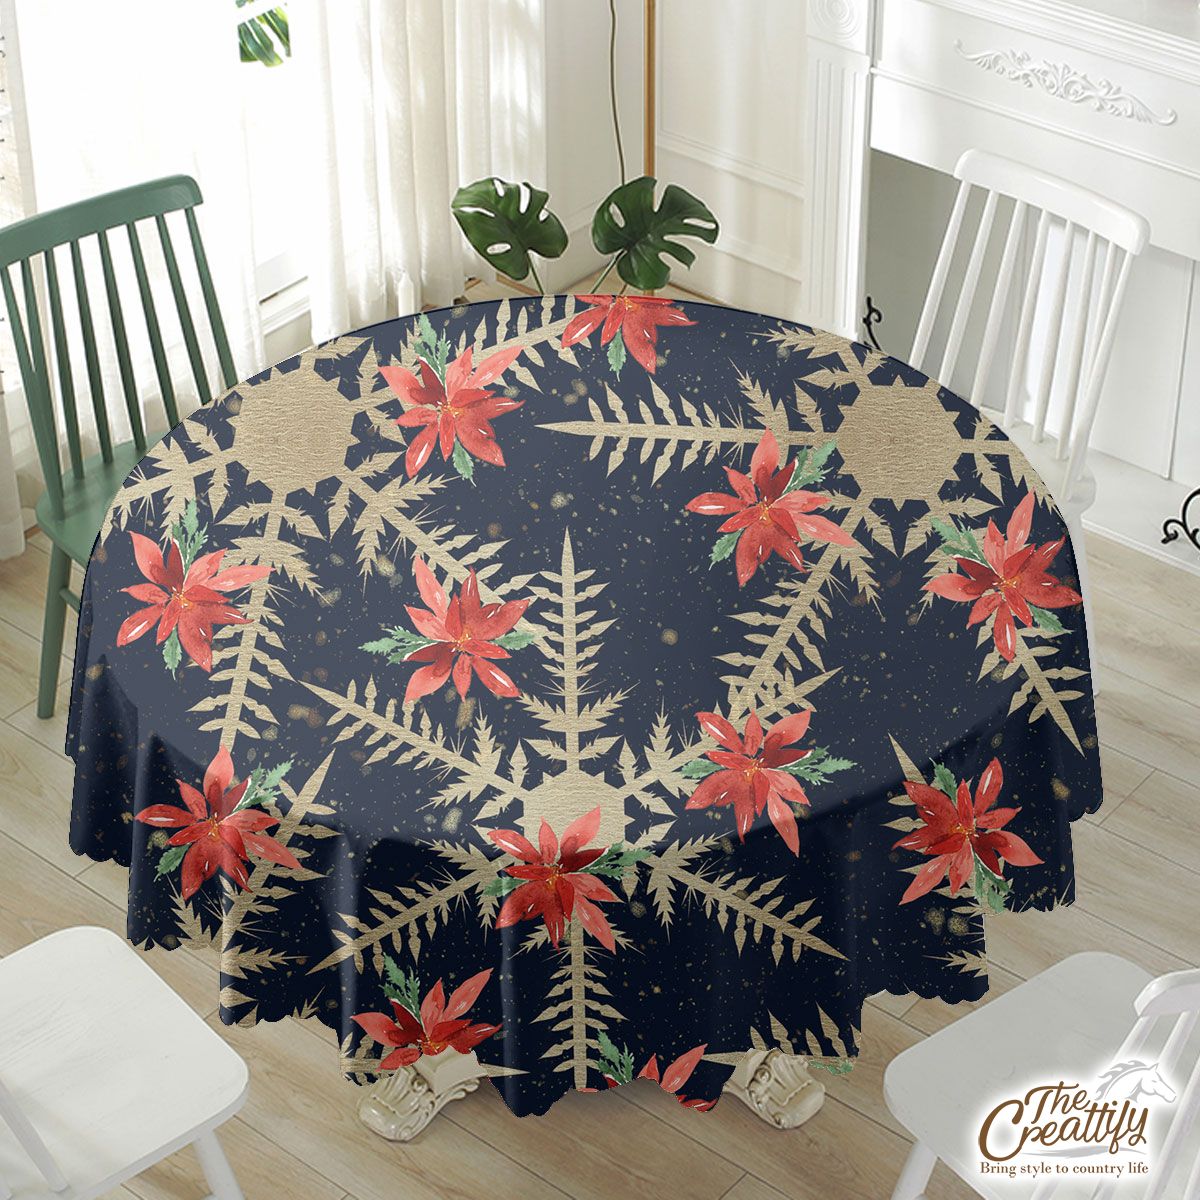 Poinsettia, Snowflake, Snowflake Pattern Waterproof Tablecloth